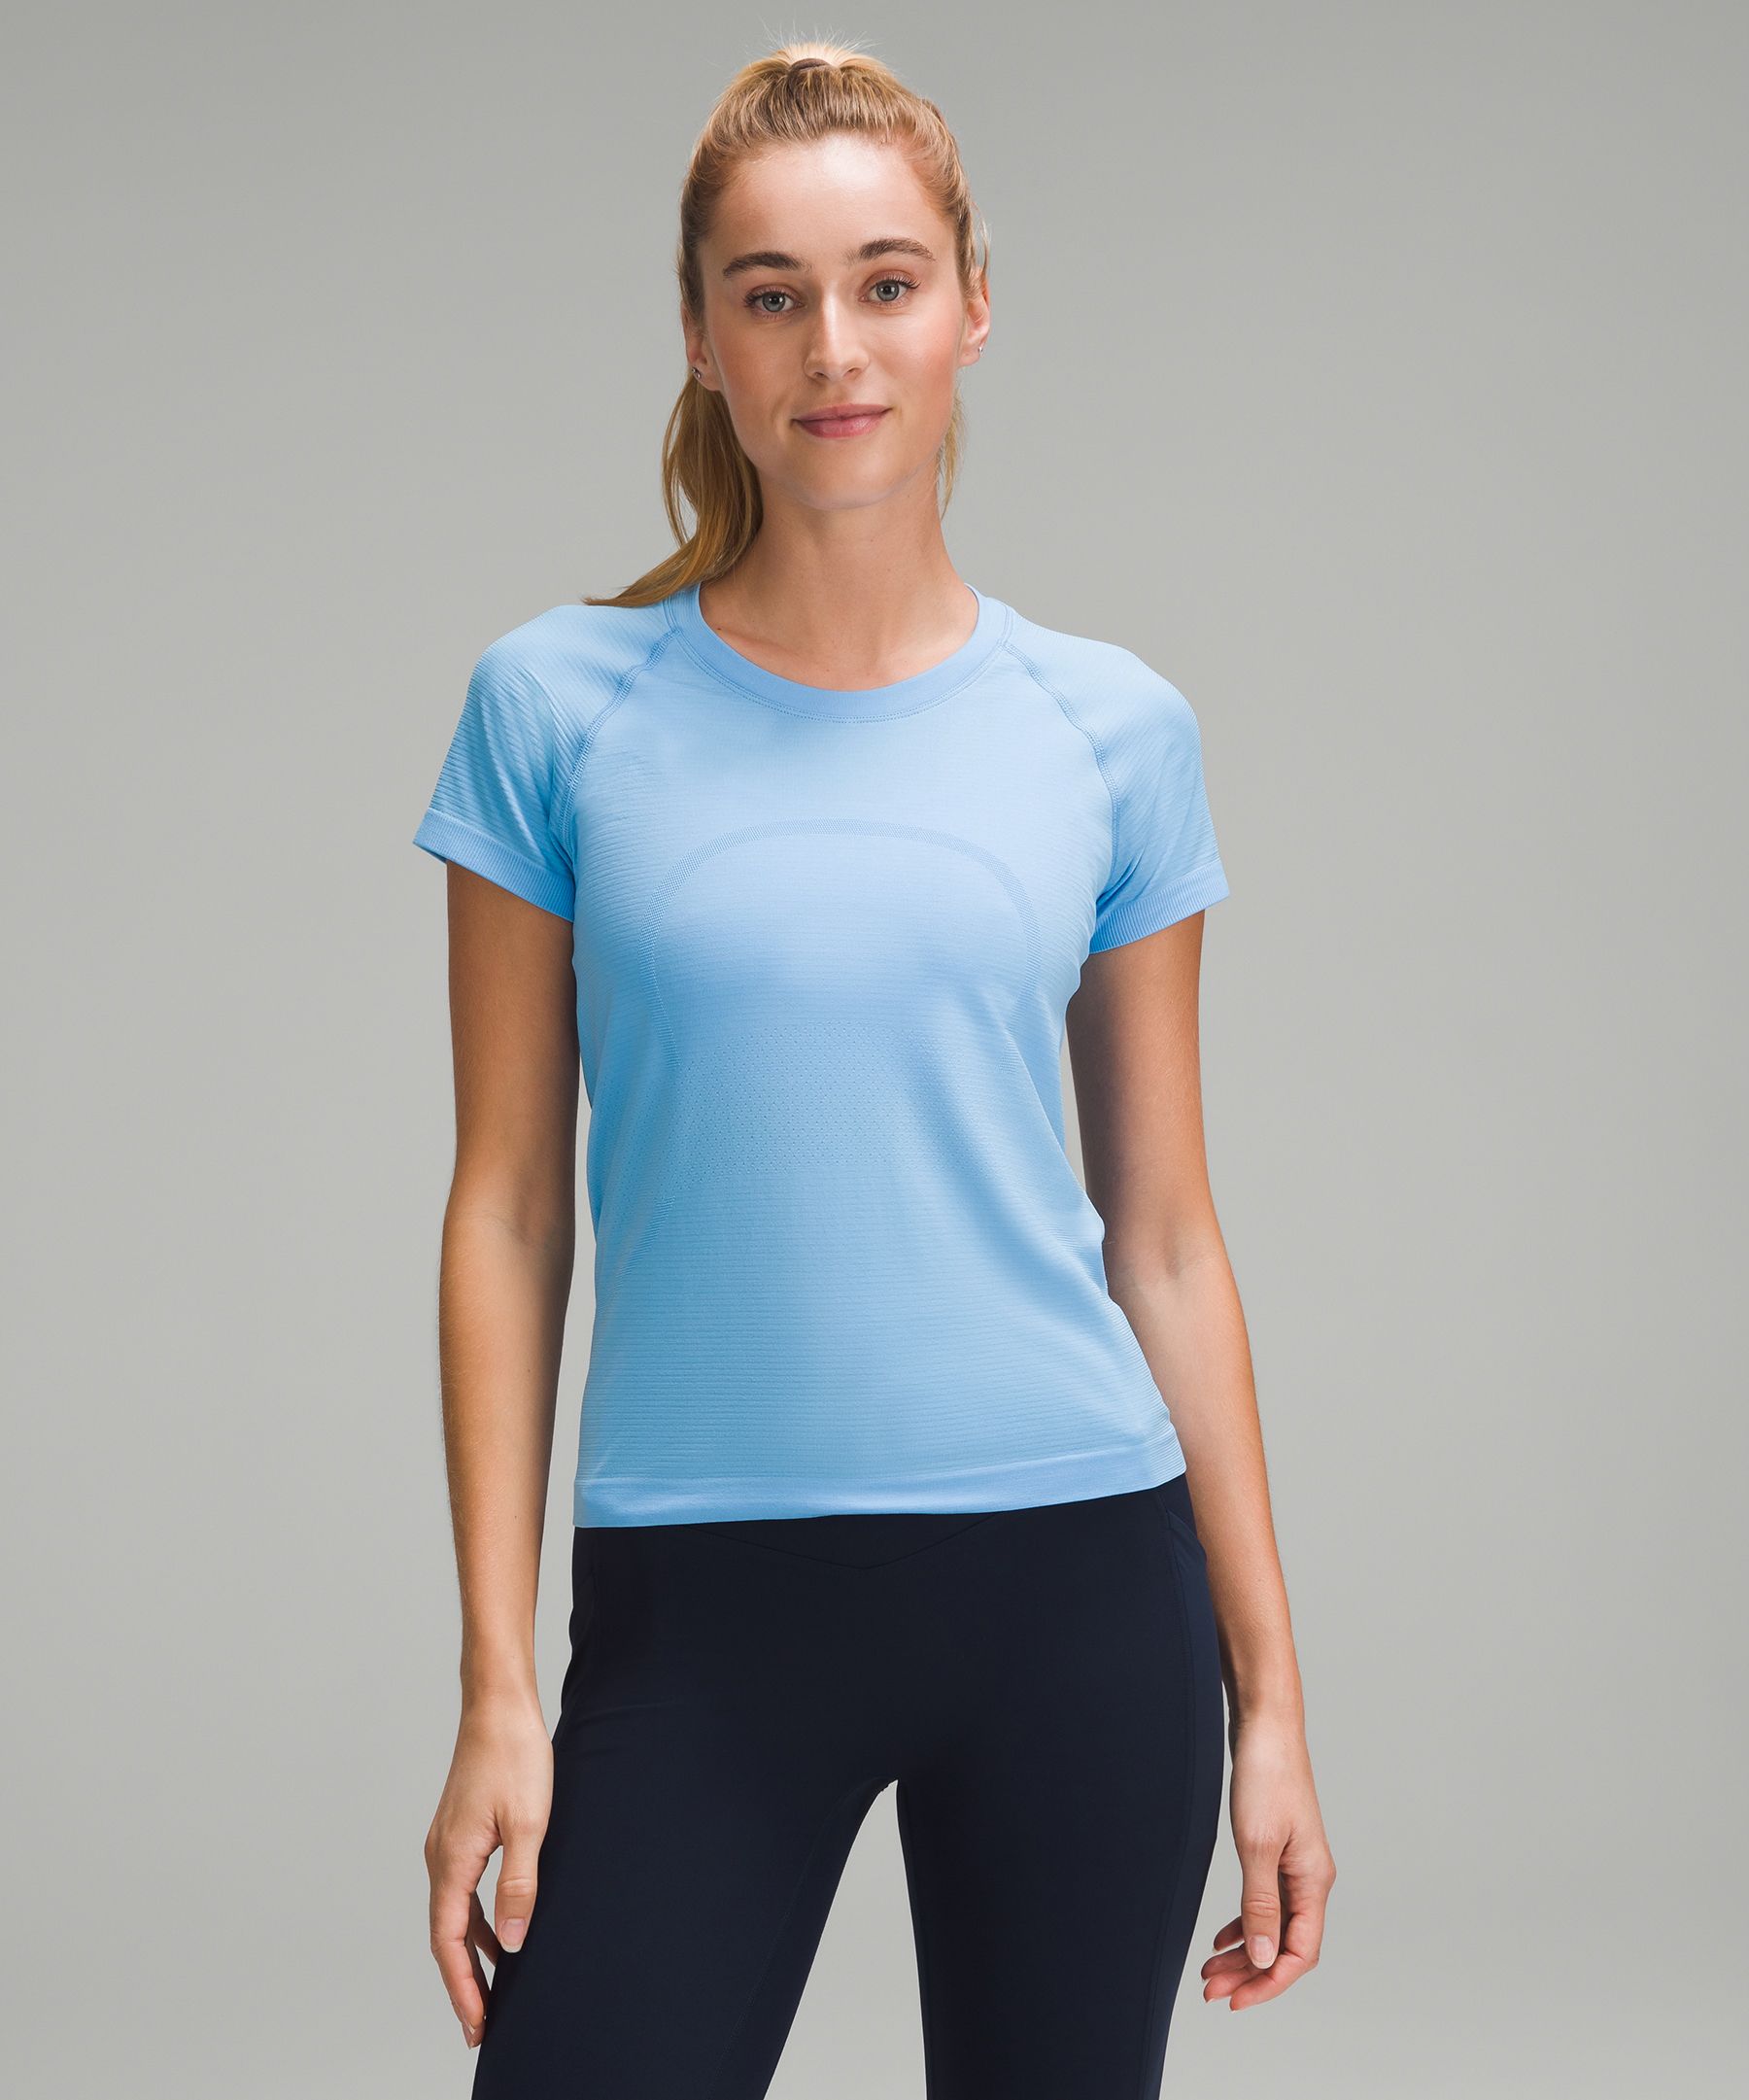 lululemon athletica Swiftly Tech Short Sleeve Shirt 2.0 Race Length in Blue